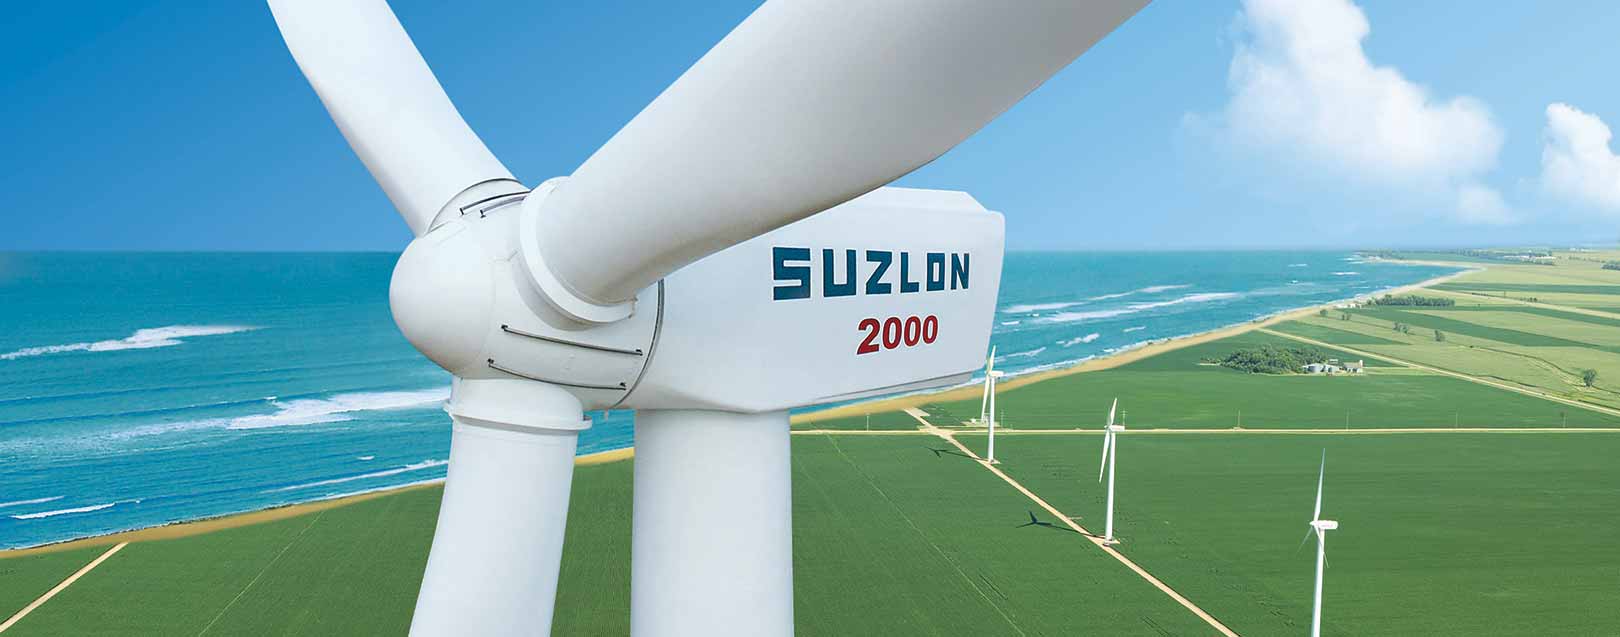 Suzlon Energy acquires 5 renewable energy firms